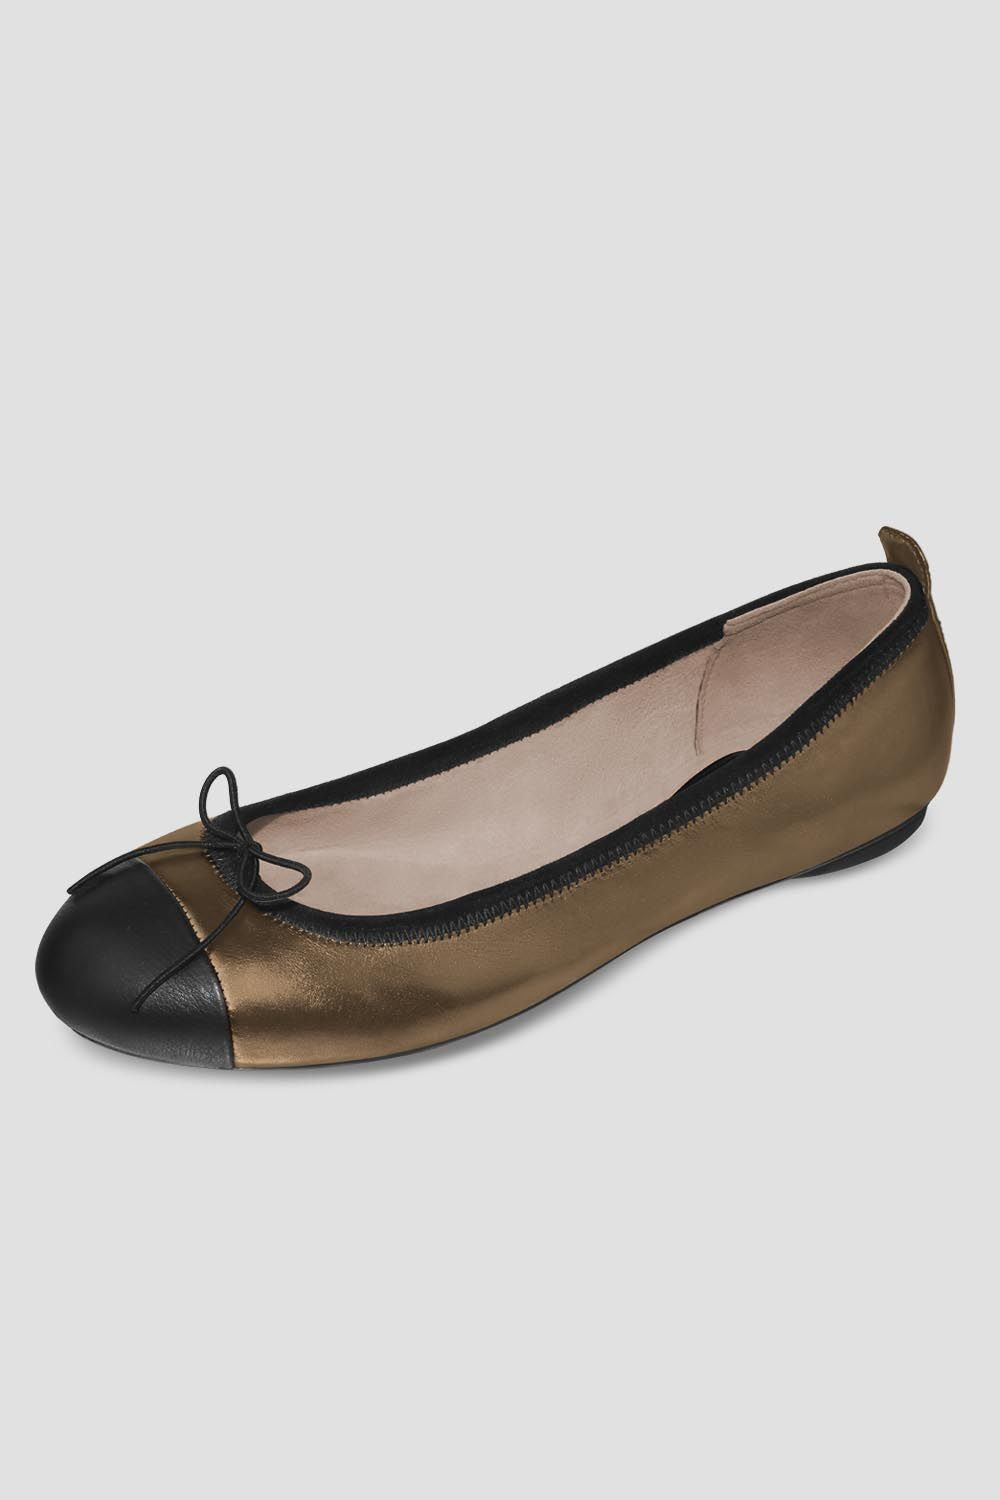 Chanel Suede Leather Dark Brown Captoe Ballerina Flats - Size 41 EU / 11 US